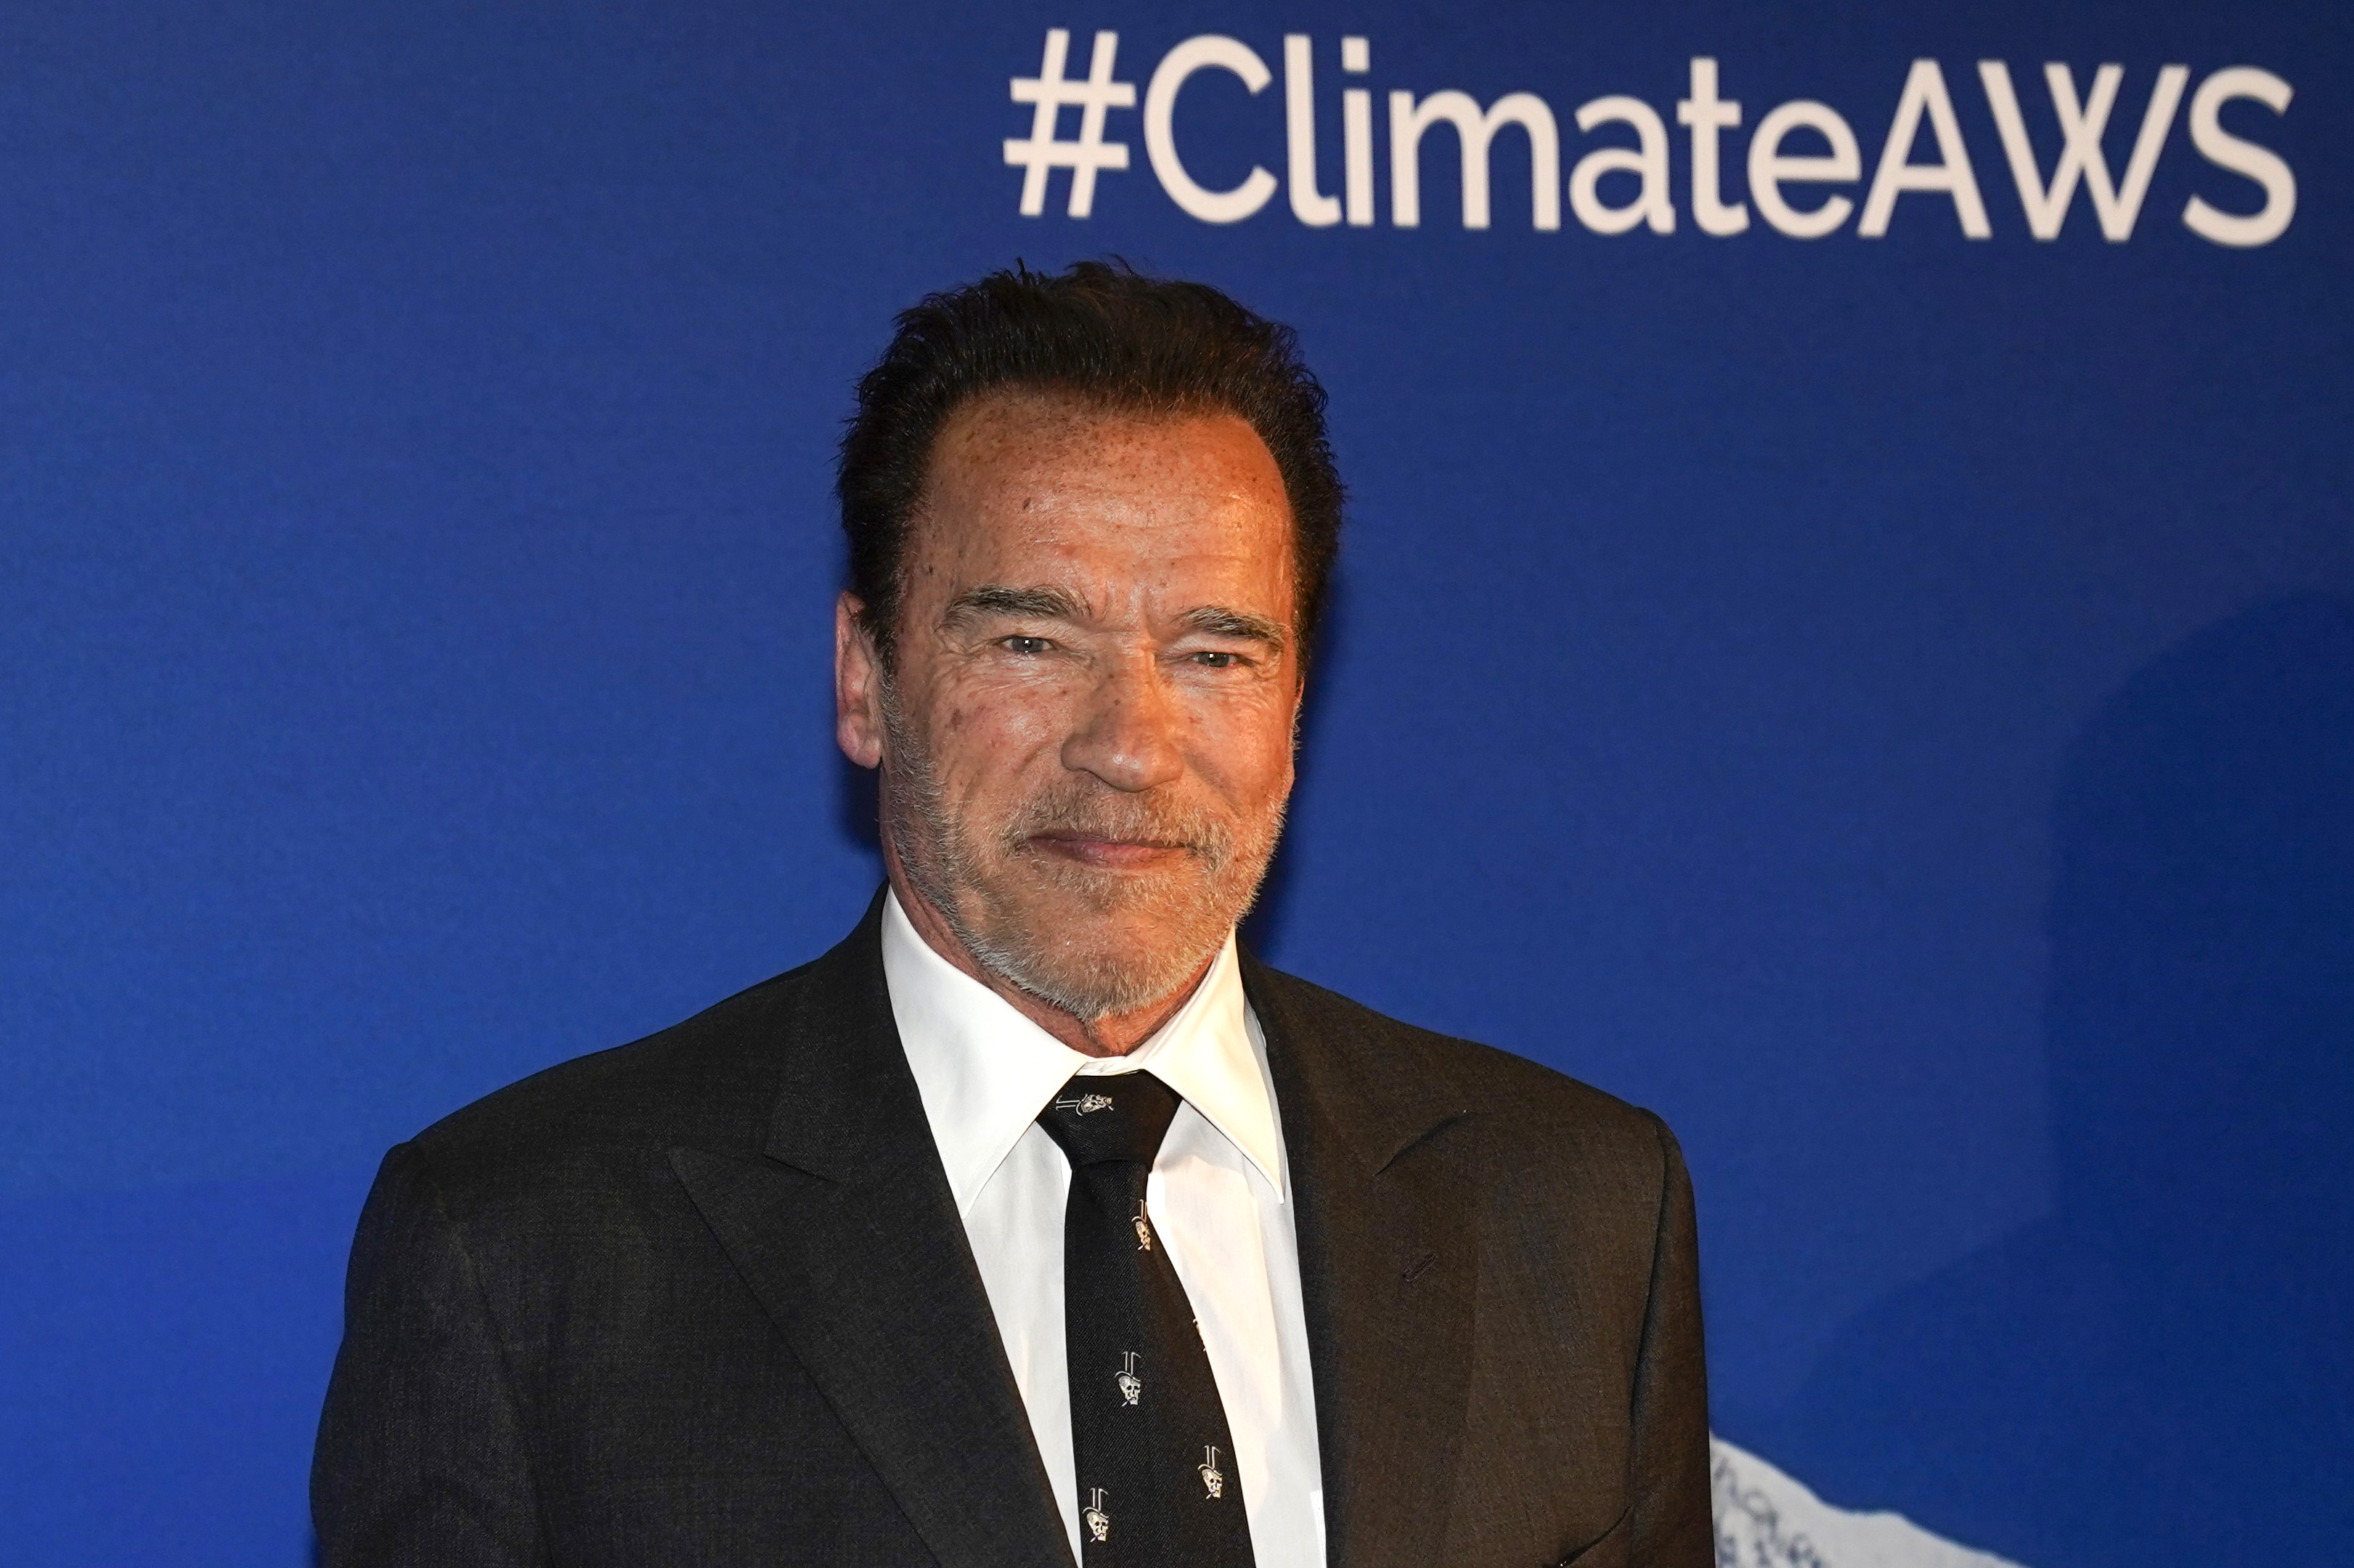  Arnold Schwarzenegger during the climate Austrian World Summit on the Audi FIS alpine ski world cup on January 23, 2020 in Kitzbuehel, Austria.